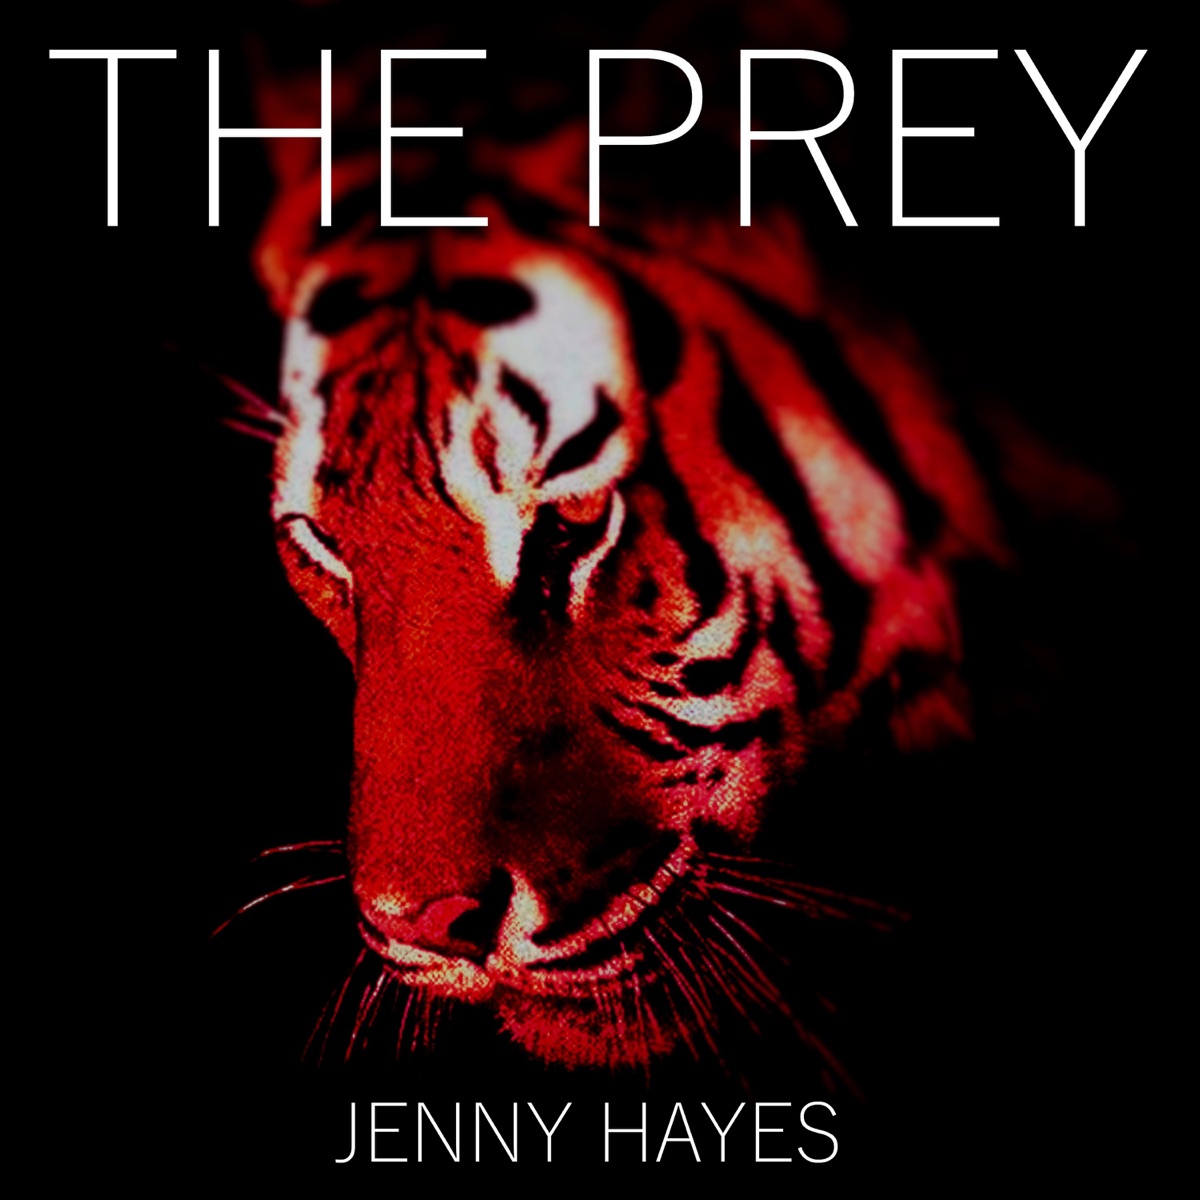 SCP-035-01 - EP de Jenny Hayes